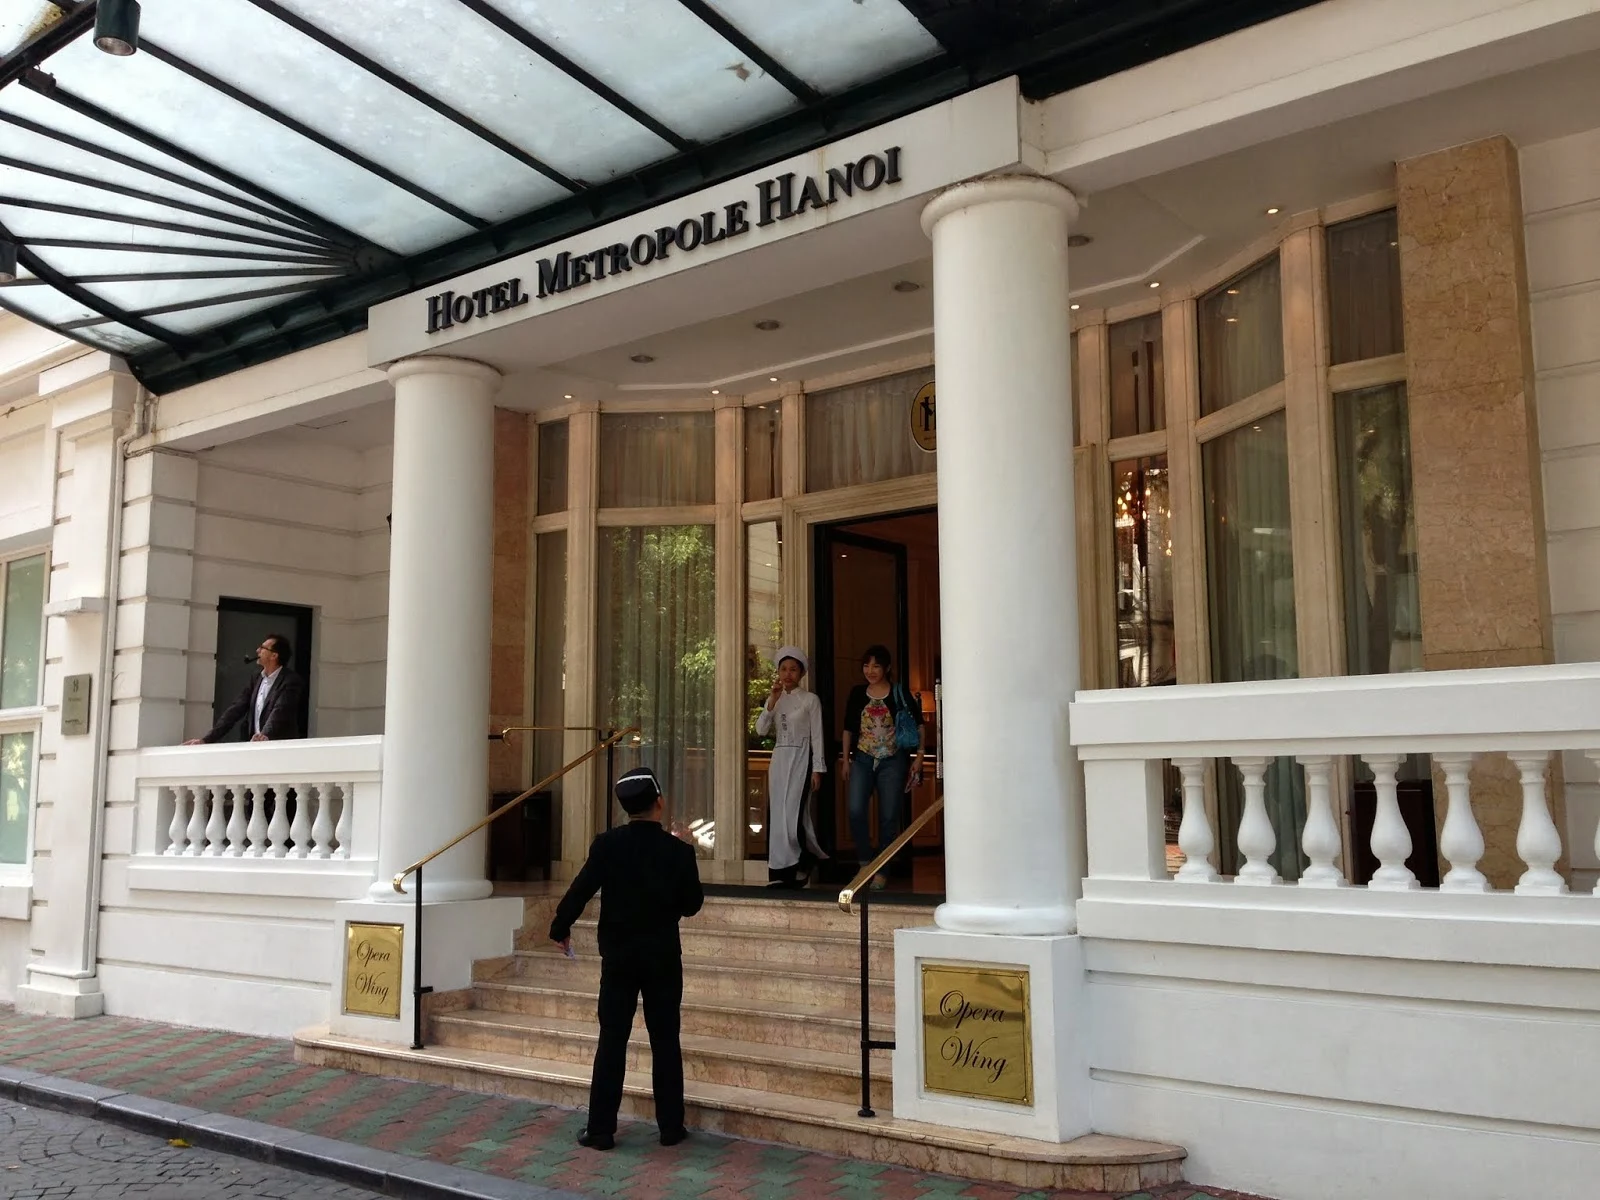 hotel-metropole-hanoi ソフィテルメトロポールホテル